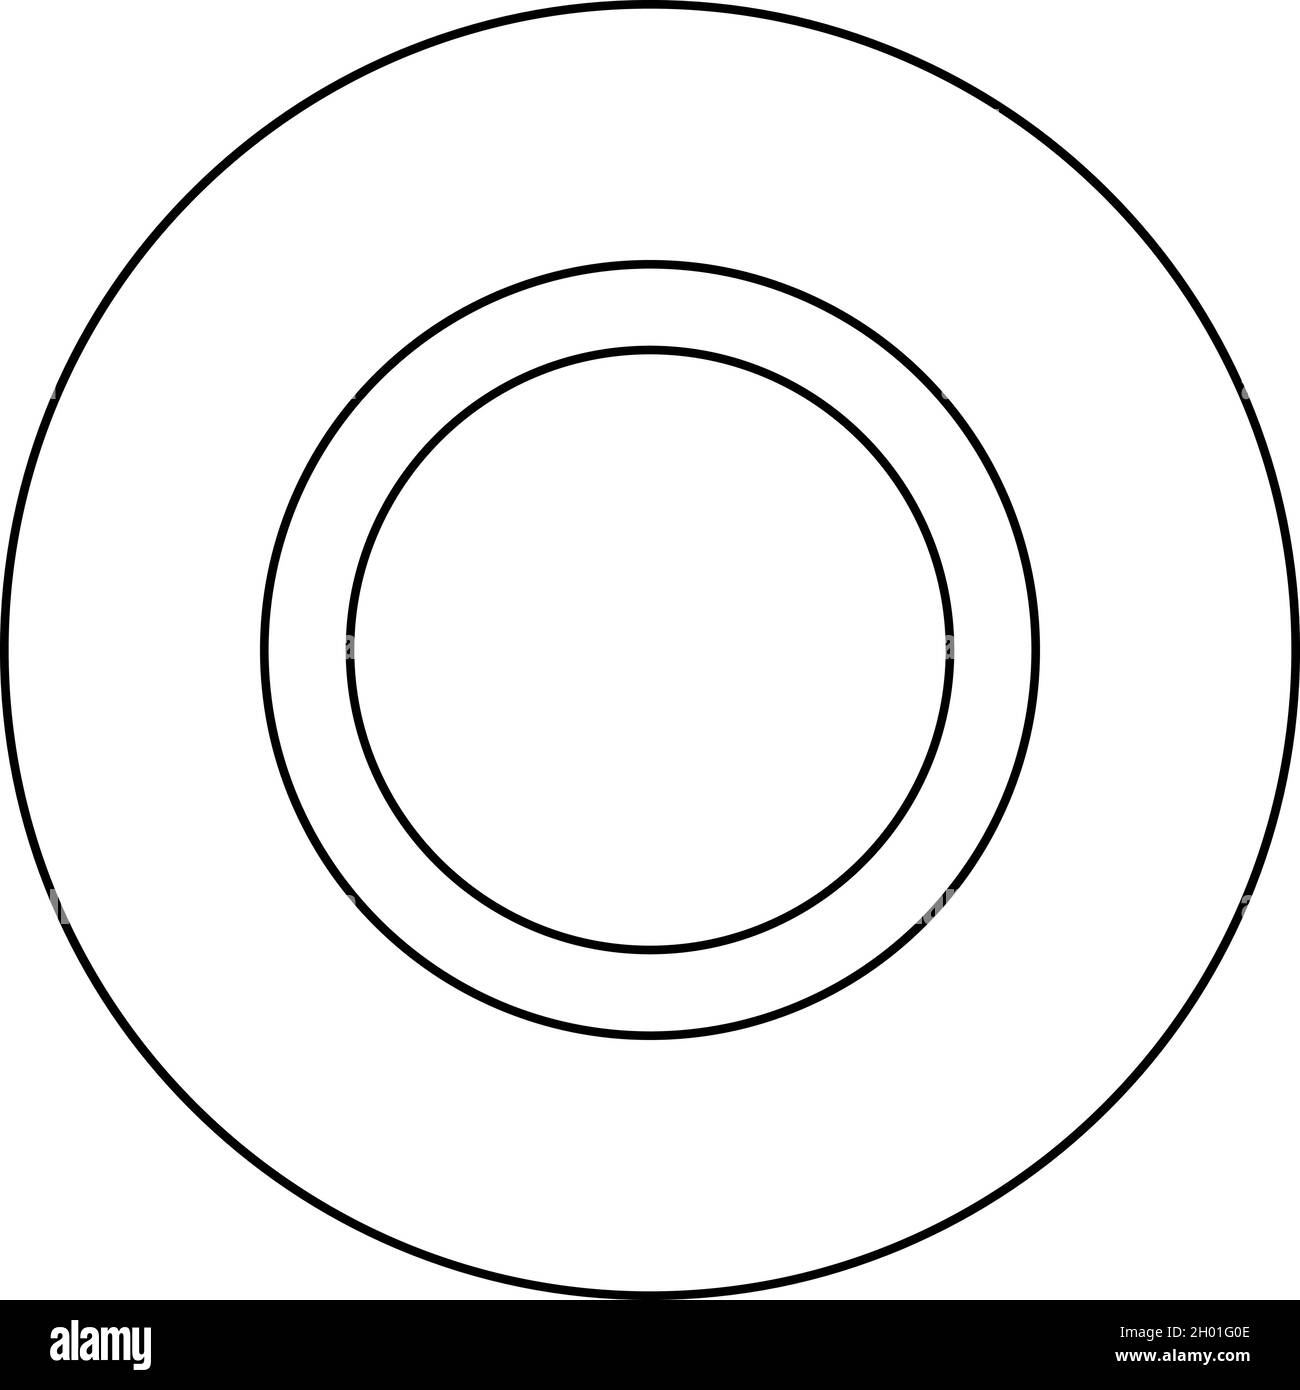 Gummidichtung Tülle Dichtung Leckage O-Ring Retten Symbol im Kreis rund  schwarz Farbe Vektor-Illustration solide Kontur Stil einfaches Bild  Stock-Vektorgrafik - Alamy